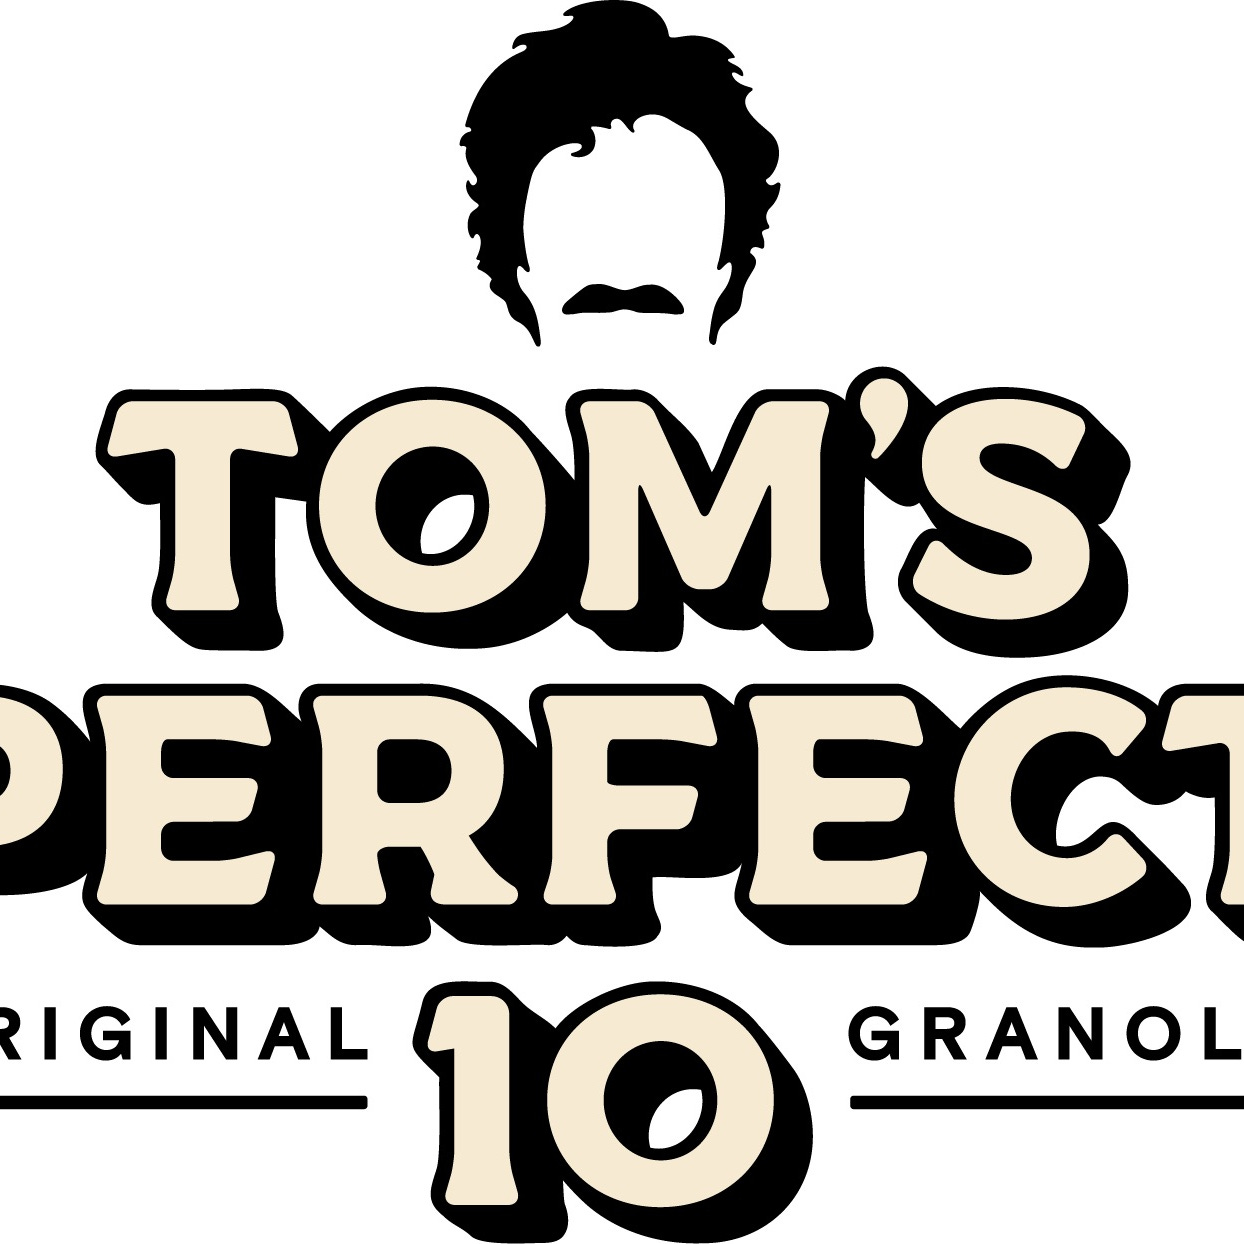 Tom's Perfect 10